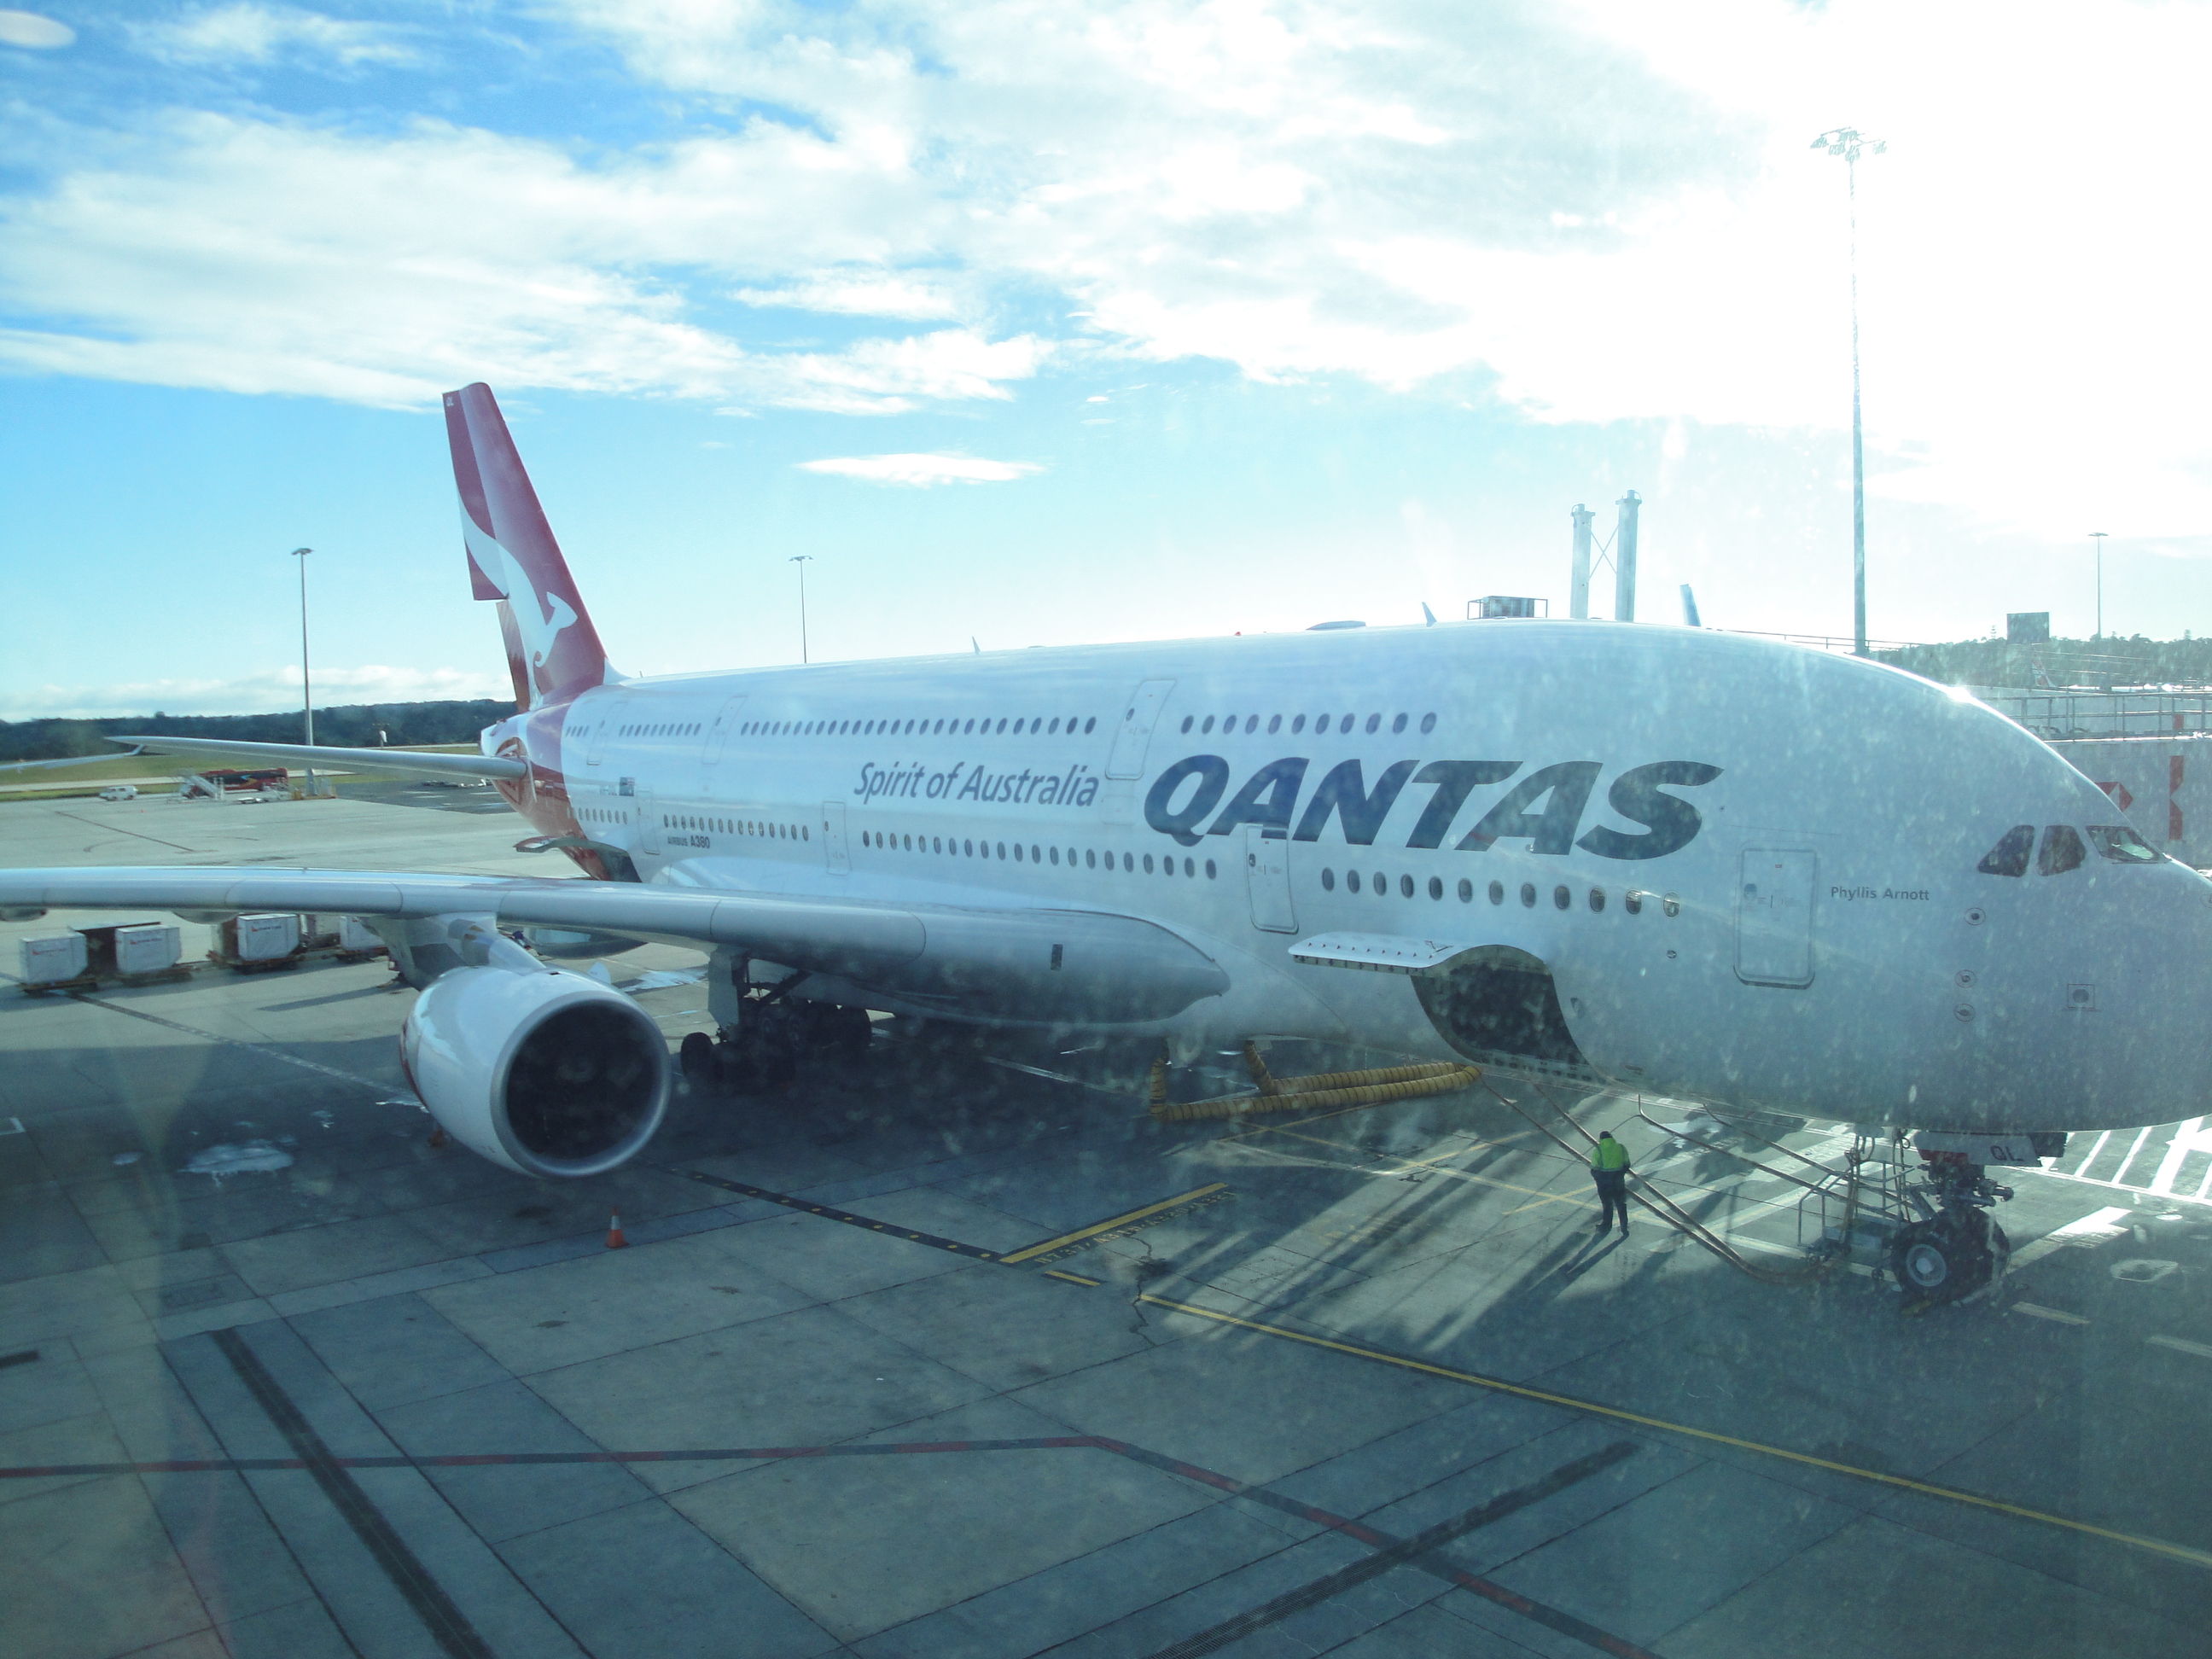 Qantas A380 at Melbourne Airport